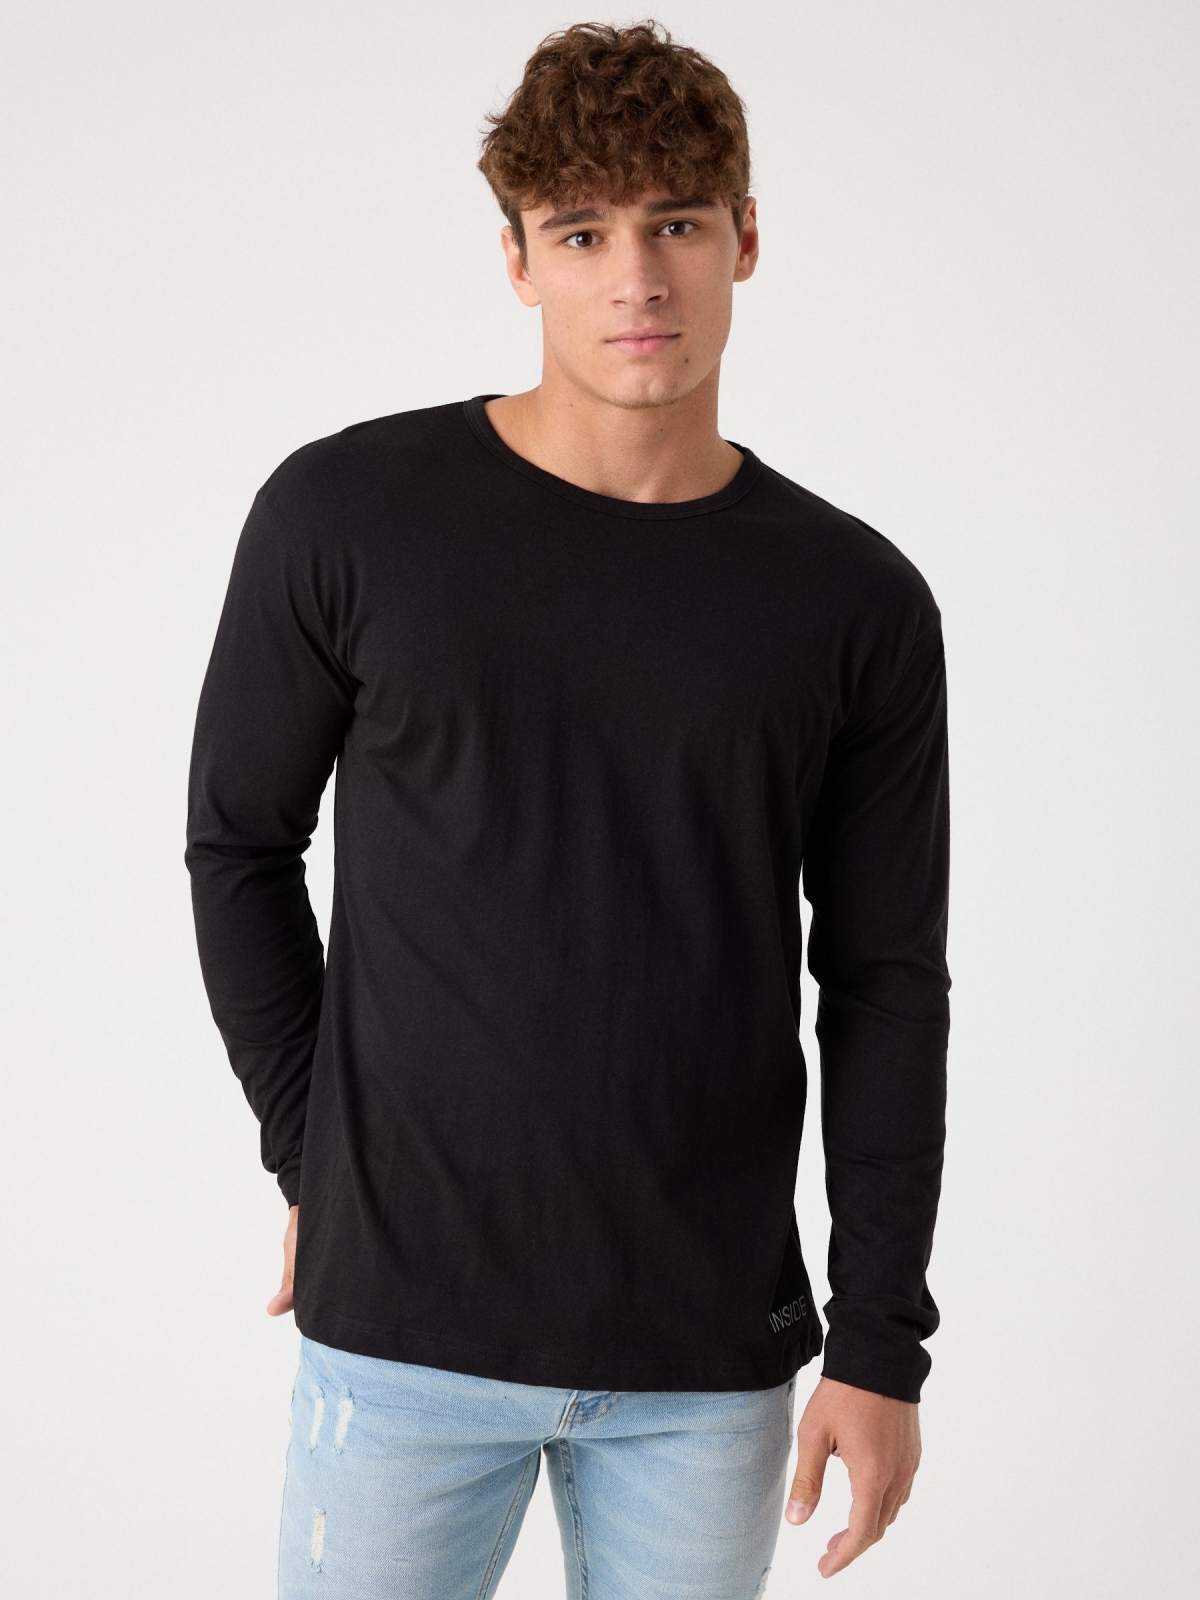 Camiseta básica manga larga negro vista media frontal